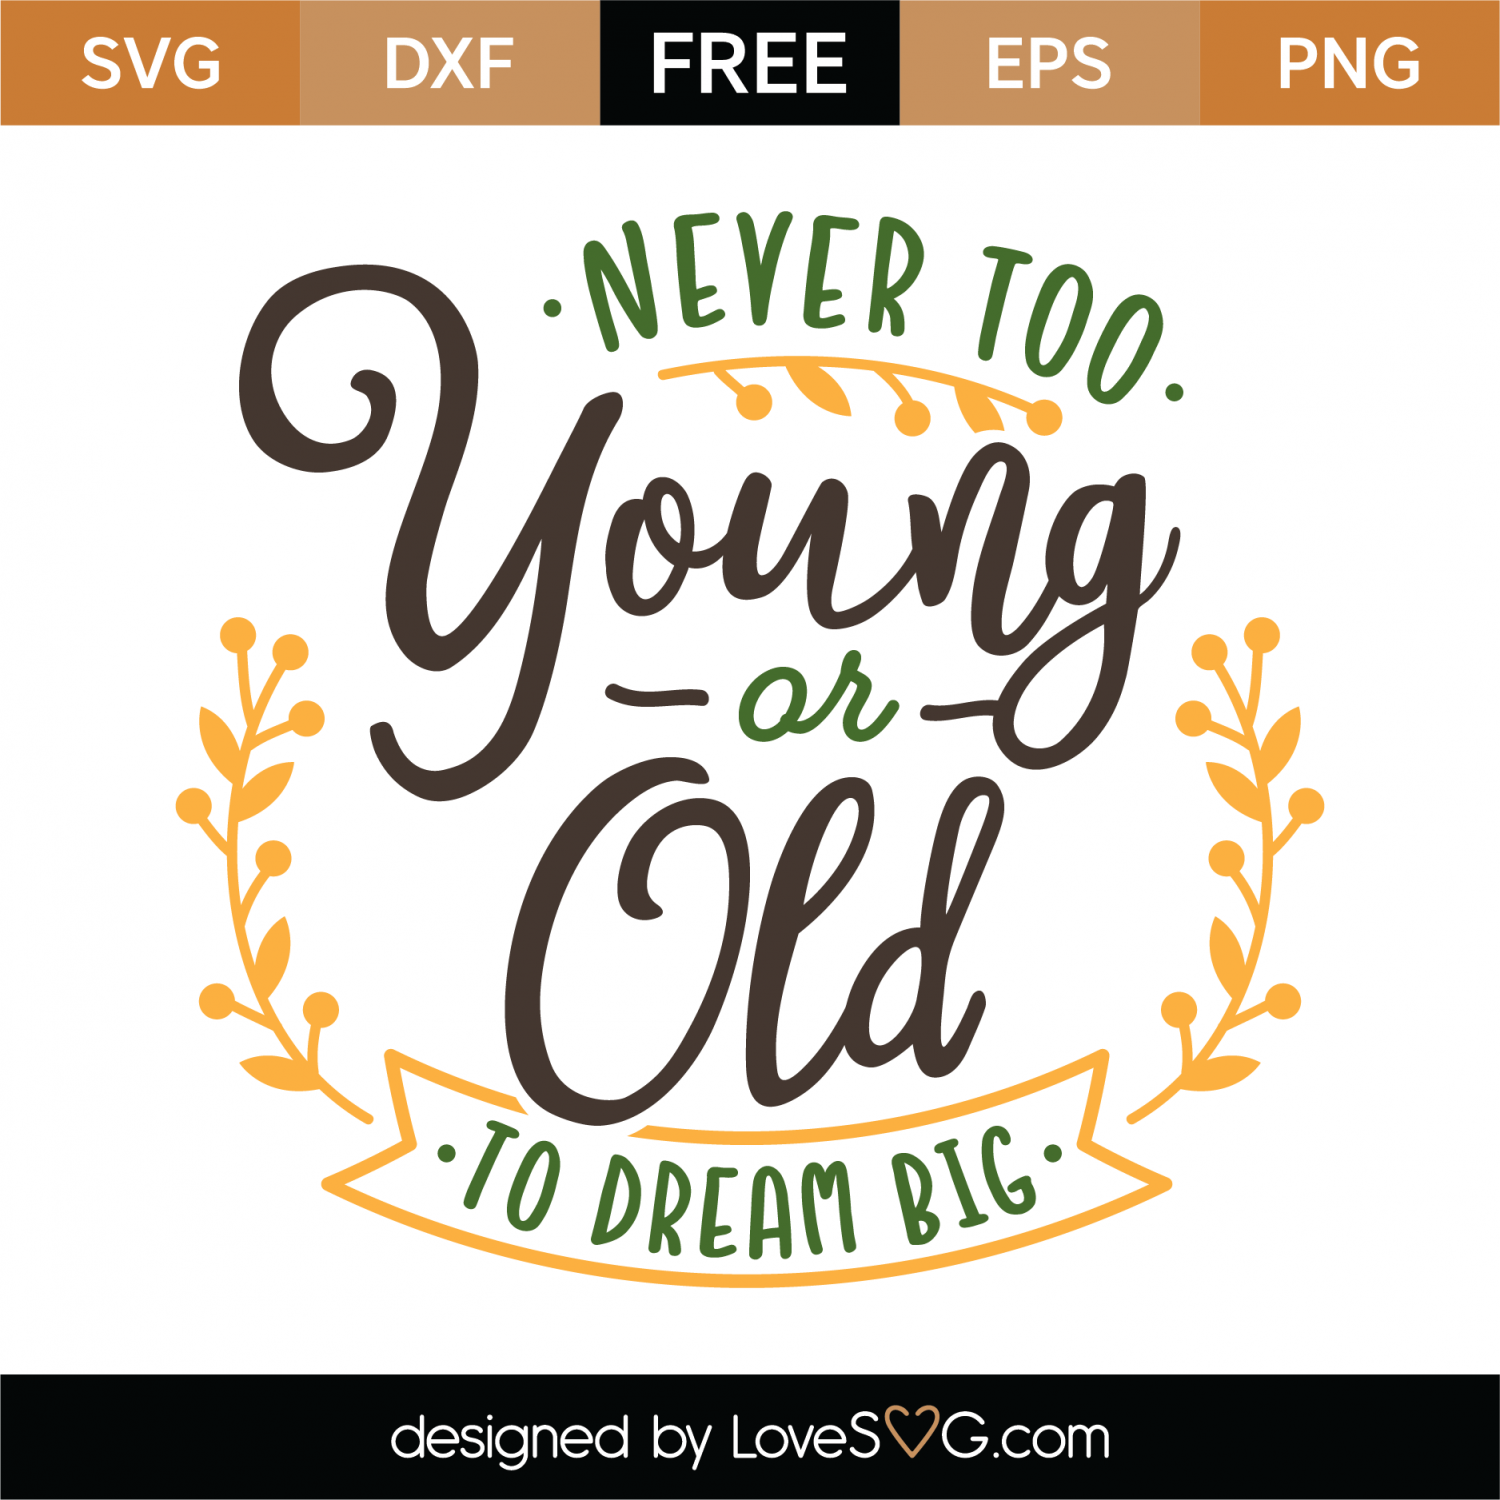 Free Dream Big SVG Cut File | Lovesvg.com